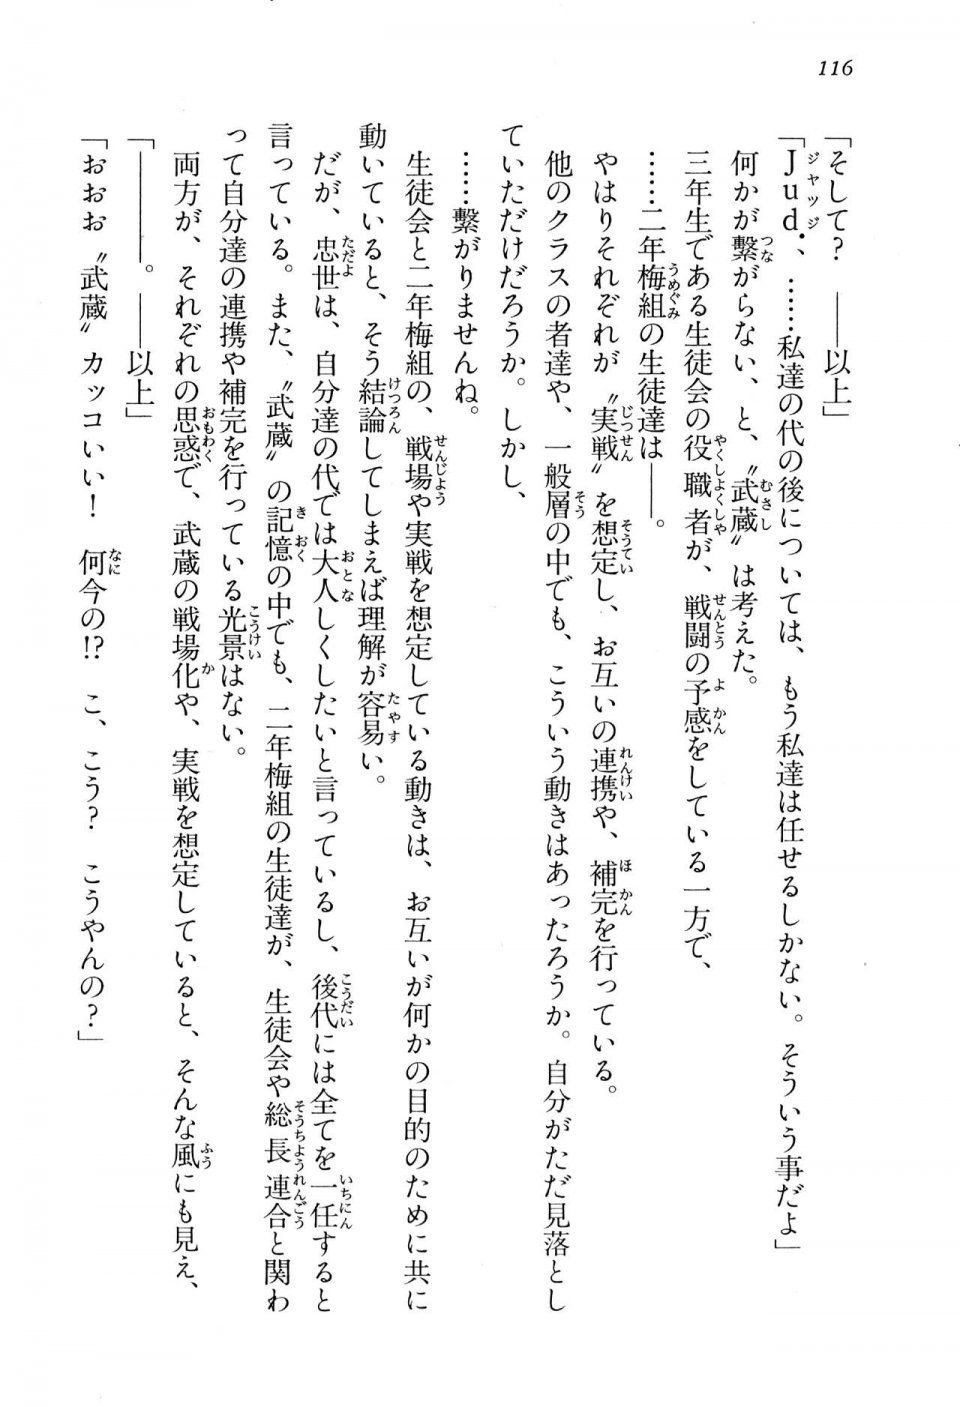 Kyoukai Senjou no Horizon BD Special Mininovel Vol 3(2A) - Photo #120